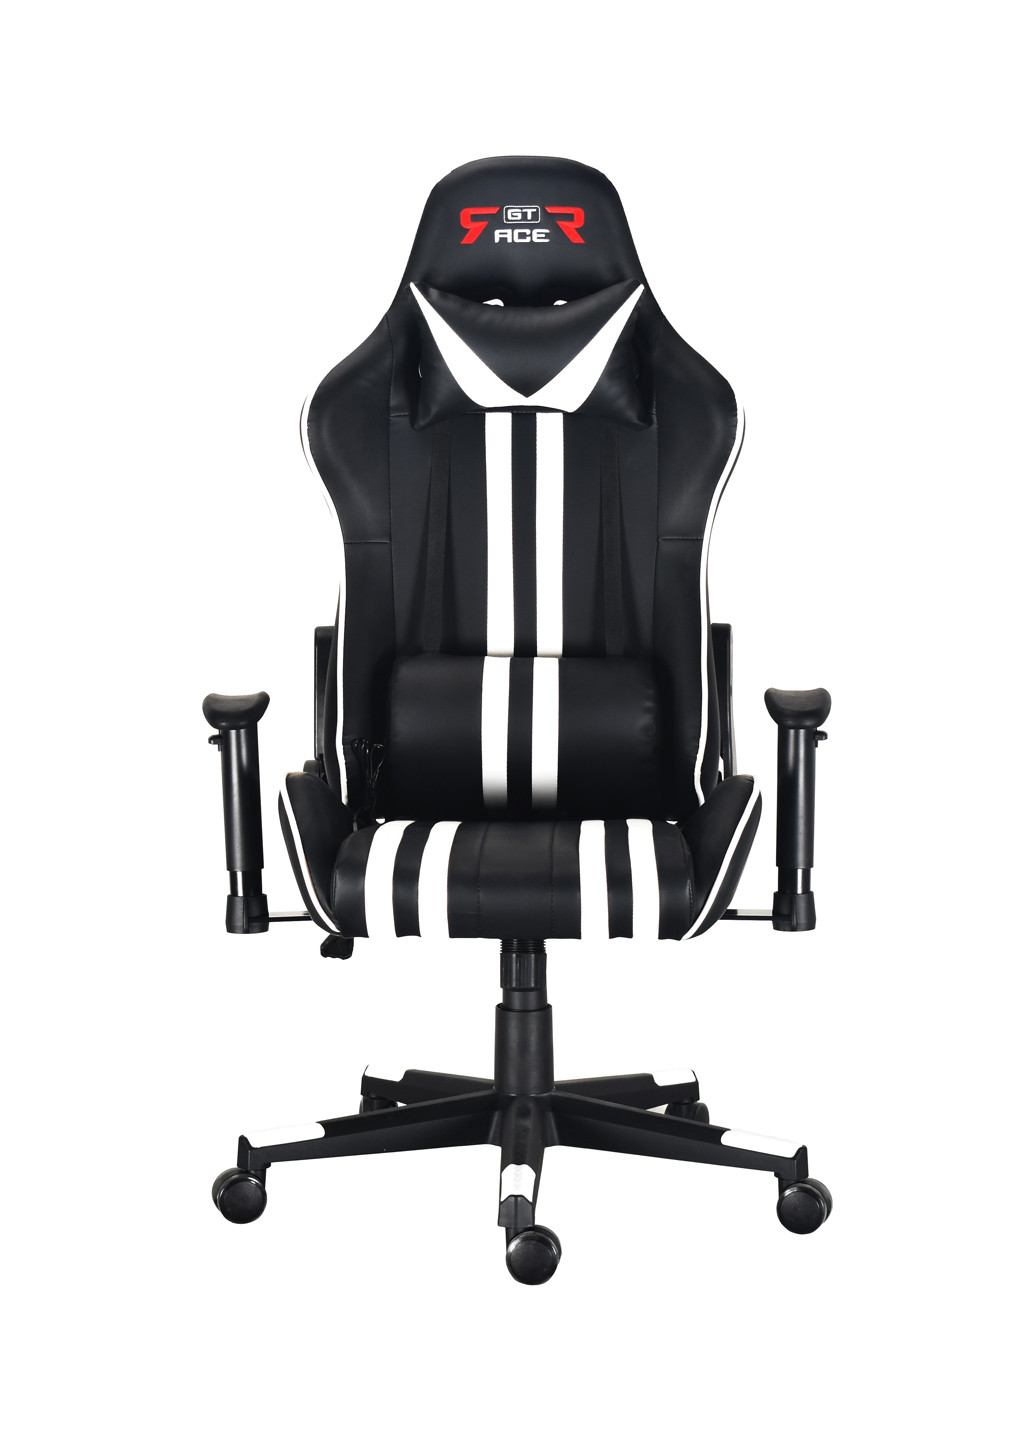 Кресло X-2504-M Black/White GT Racer кресло gt racer x-2504-m black/white (143068505)